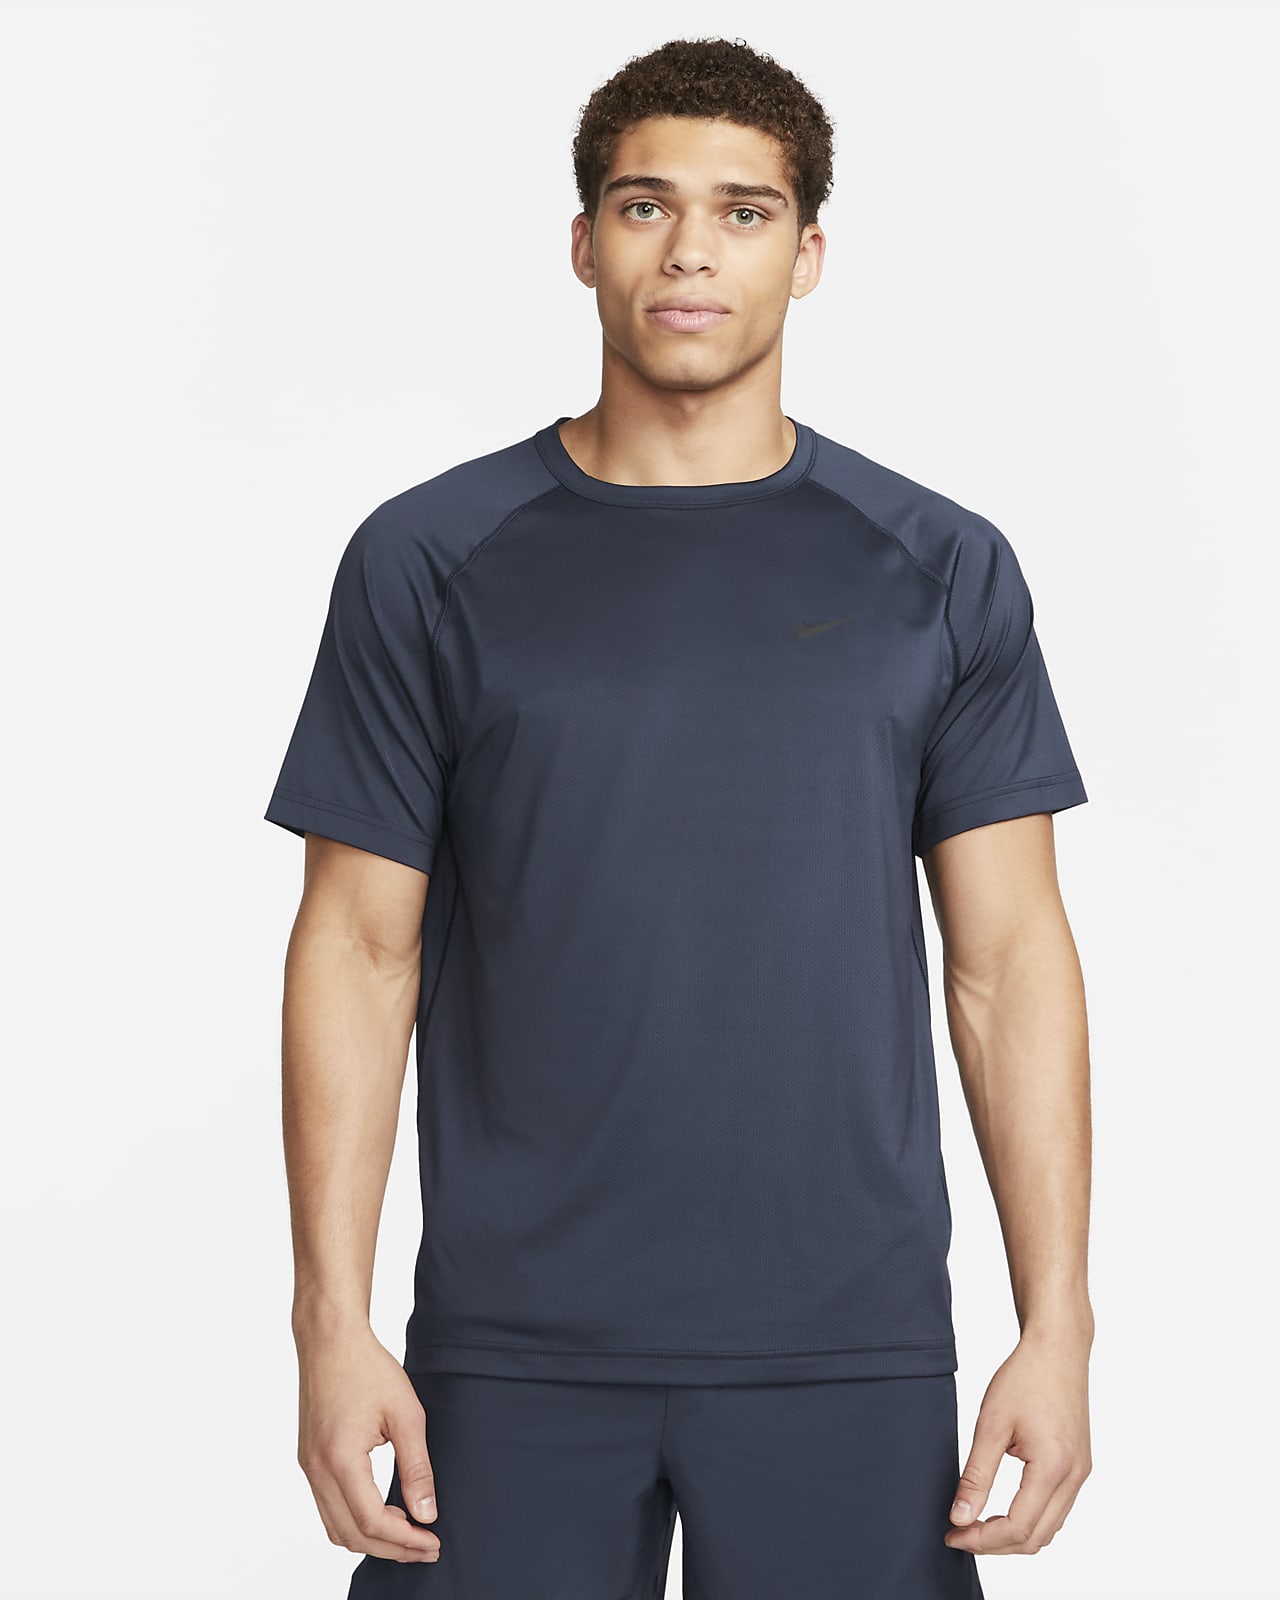 Nike Ready Men's Dri-FIT Short-sleeve Fitness Top